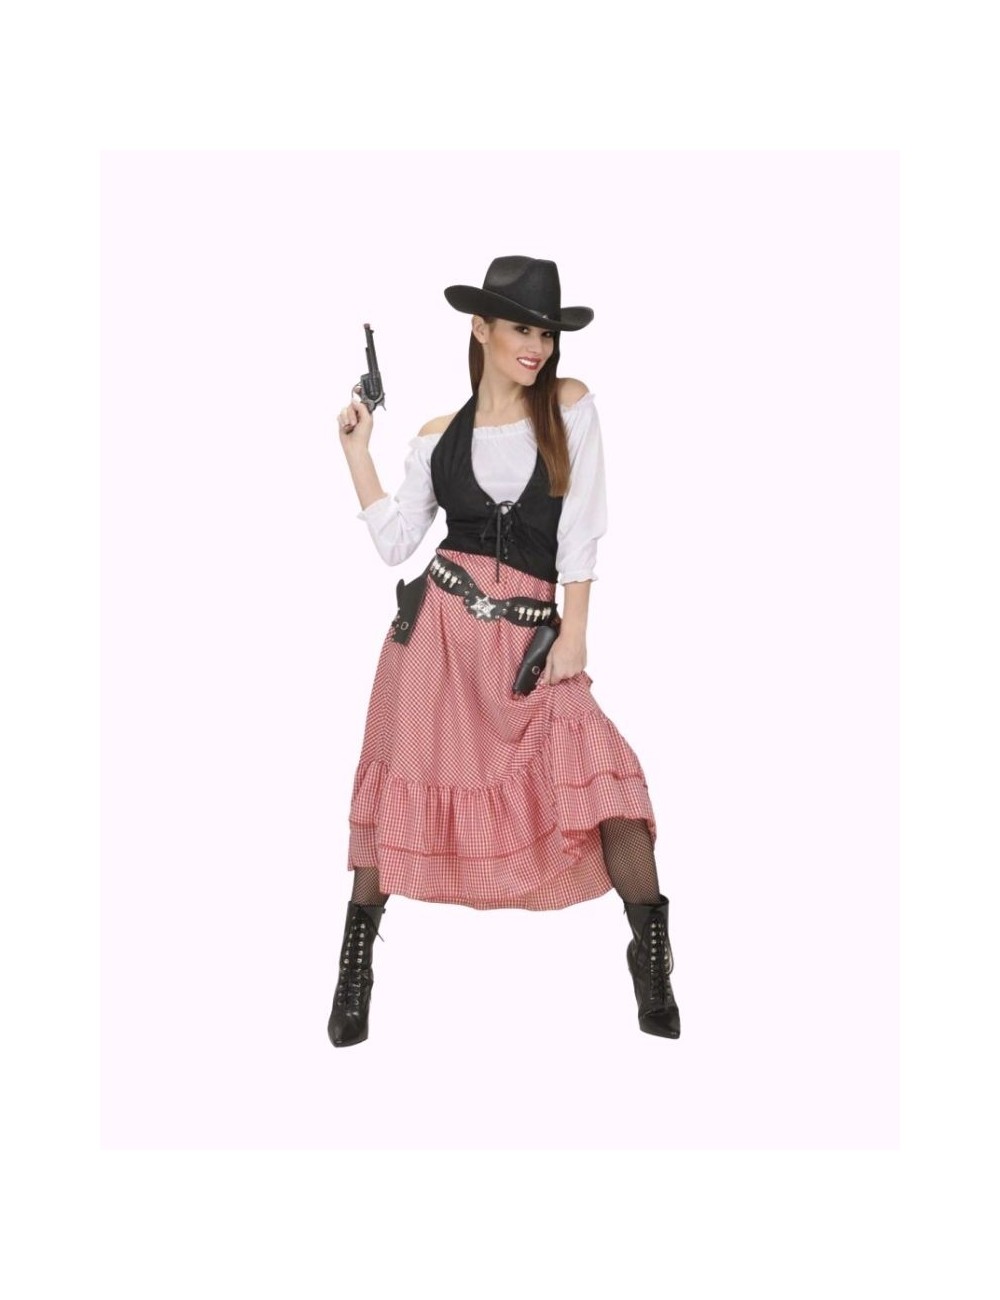 Costume woman Western